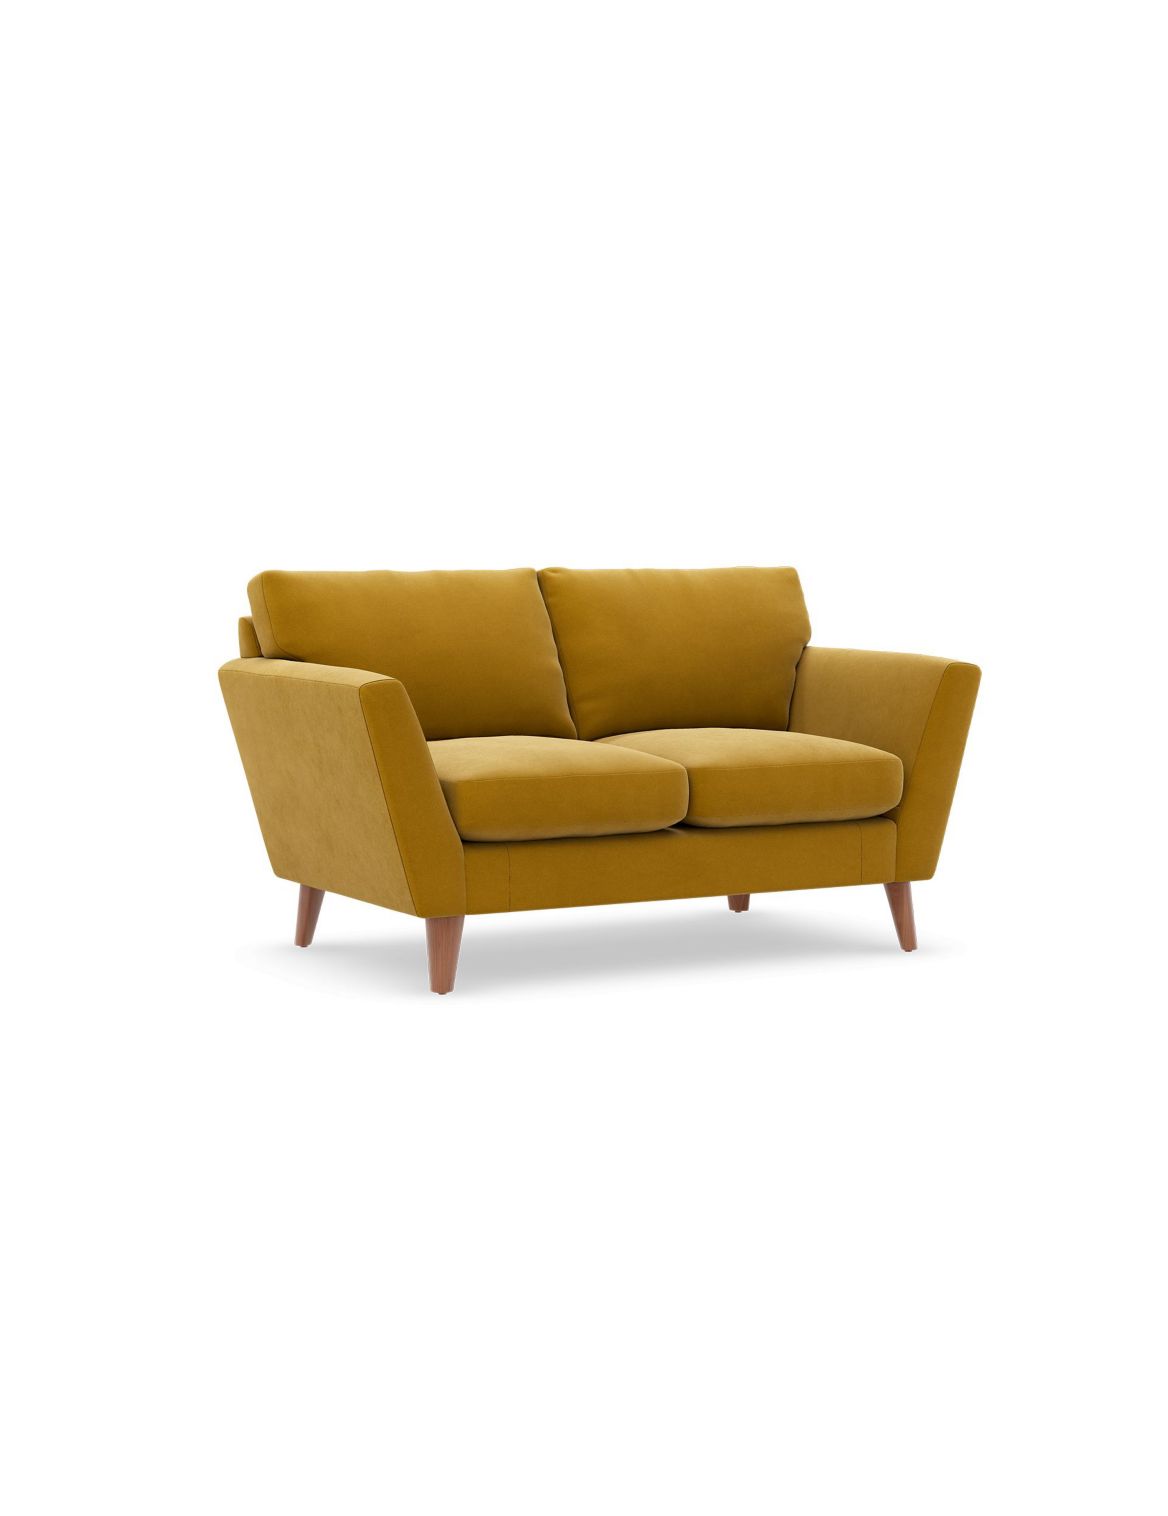 Foxbury Small Sofa yellow